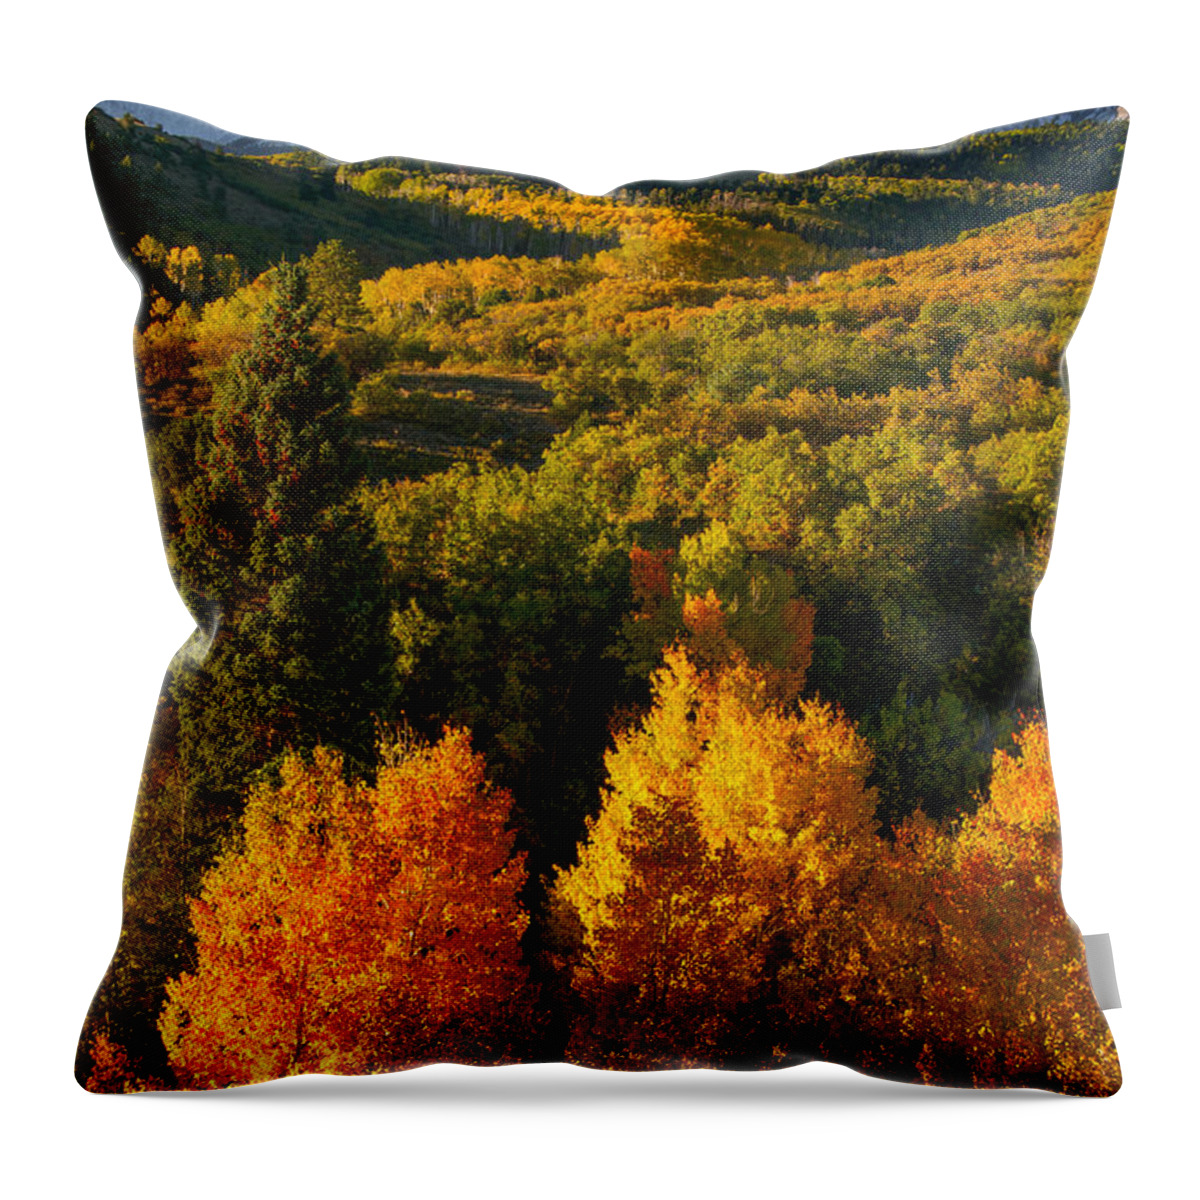 Autumn Throw Pillow featuring the photograph Autumn Light by Aaron Spong